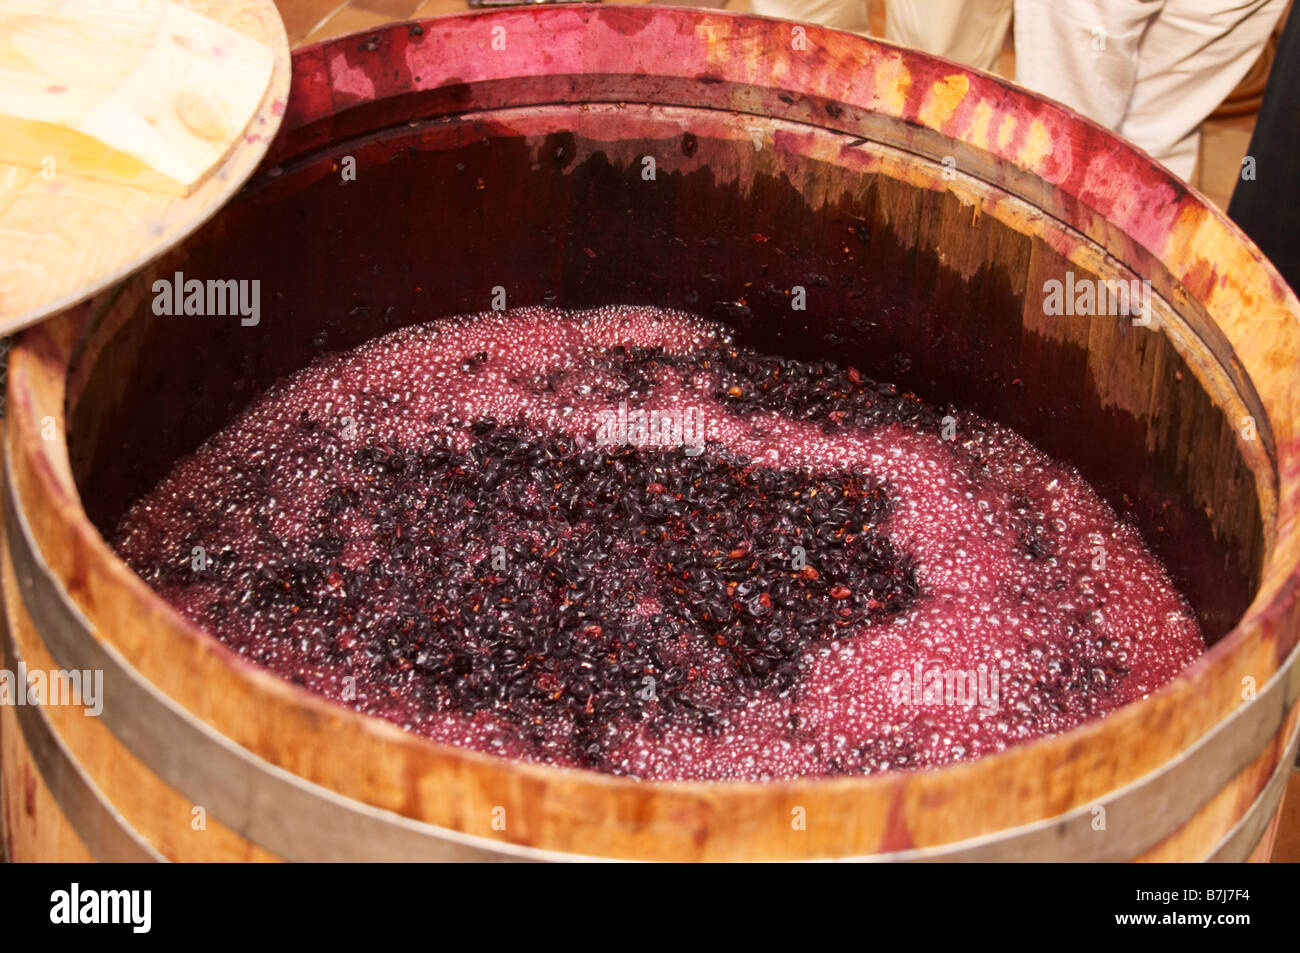 Ферментация вина. Маннитное брожение вина. Мацерация винограда. Брожение сусла вина. Мацерация виноградного сусла.